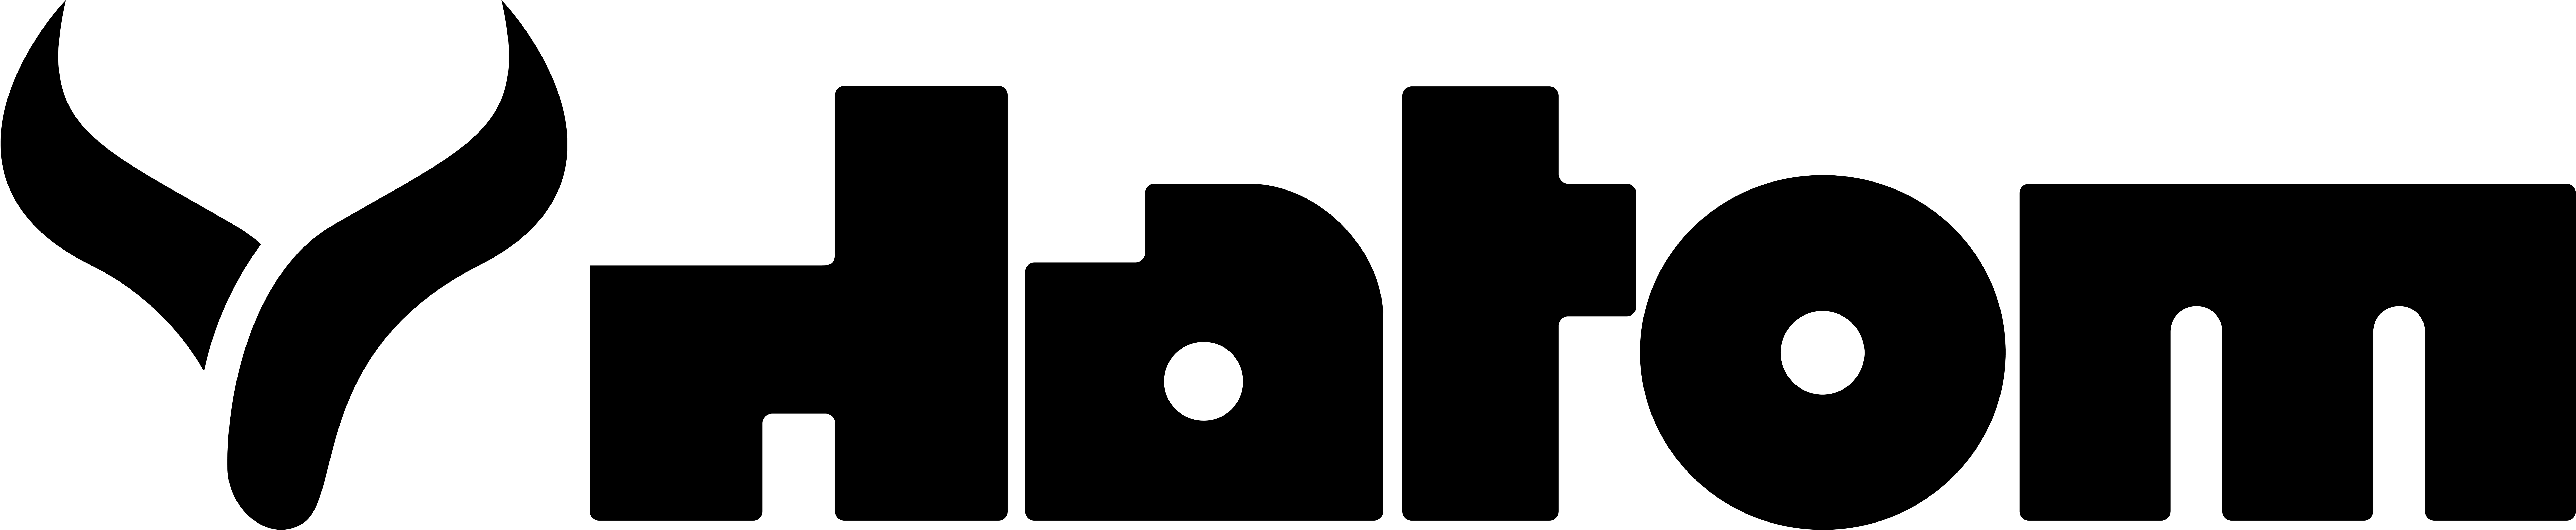 Hatom logo text black